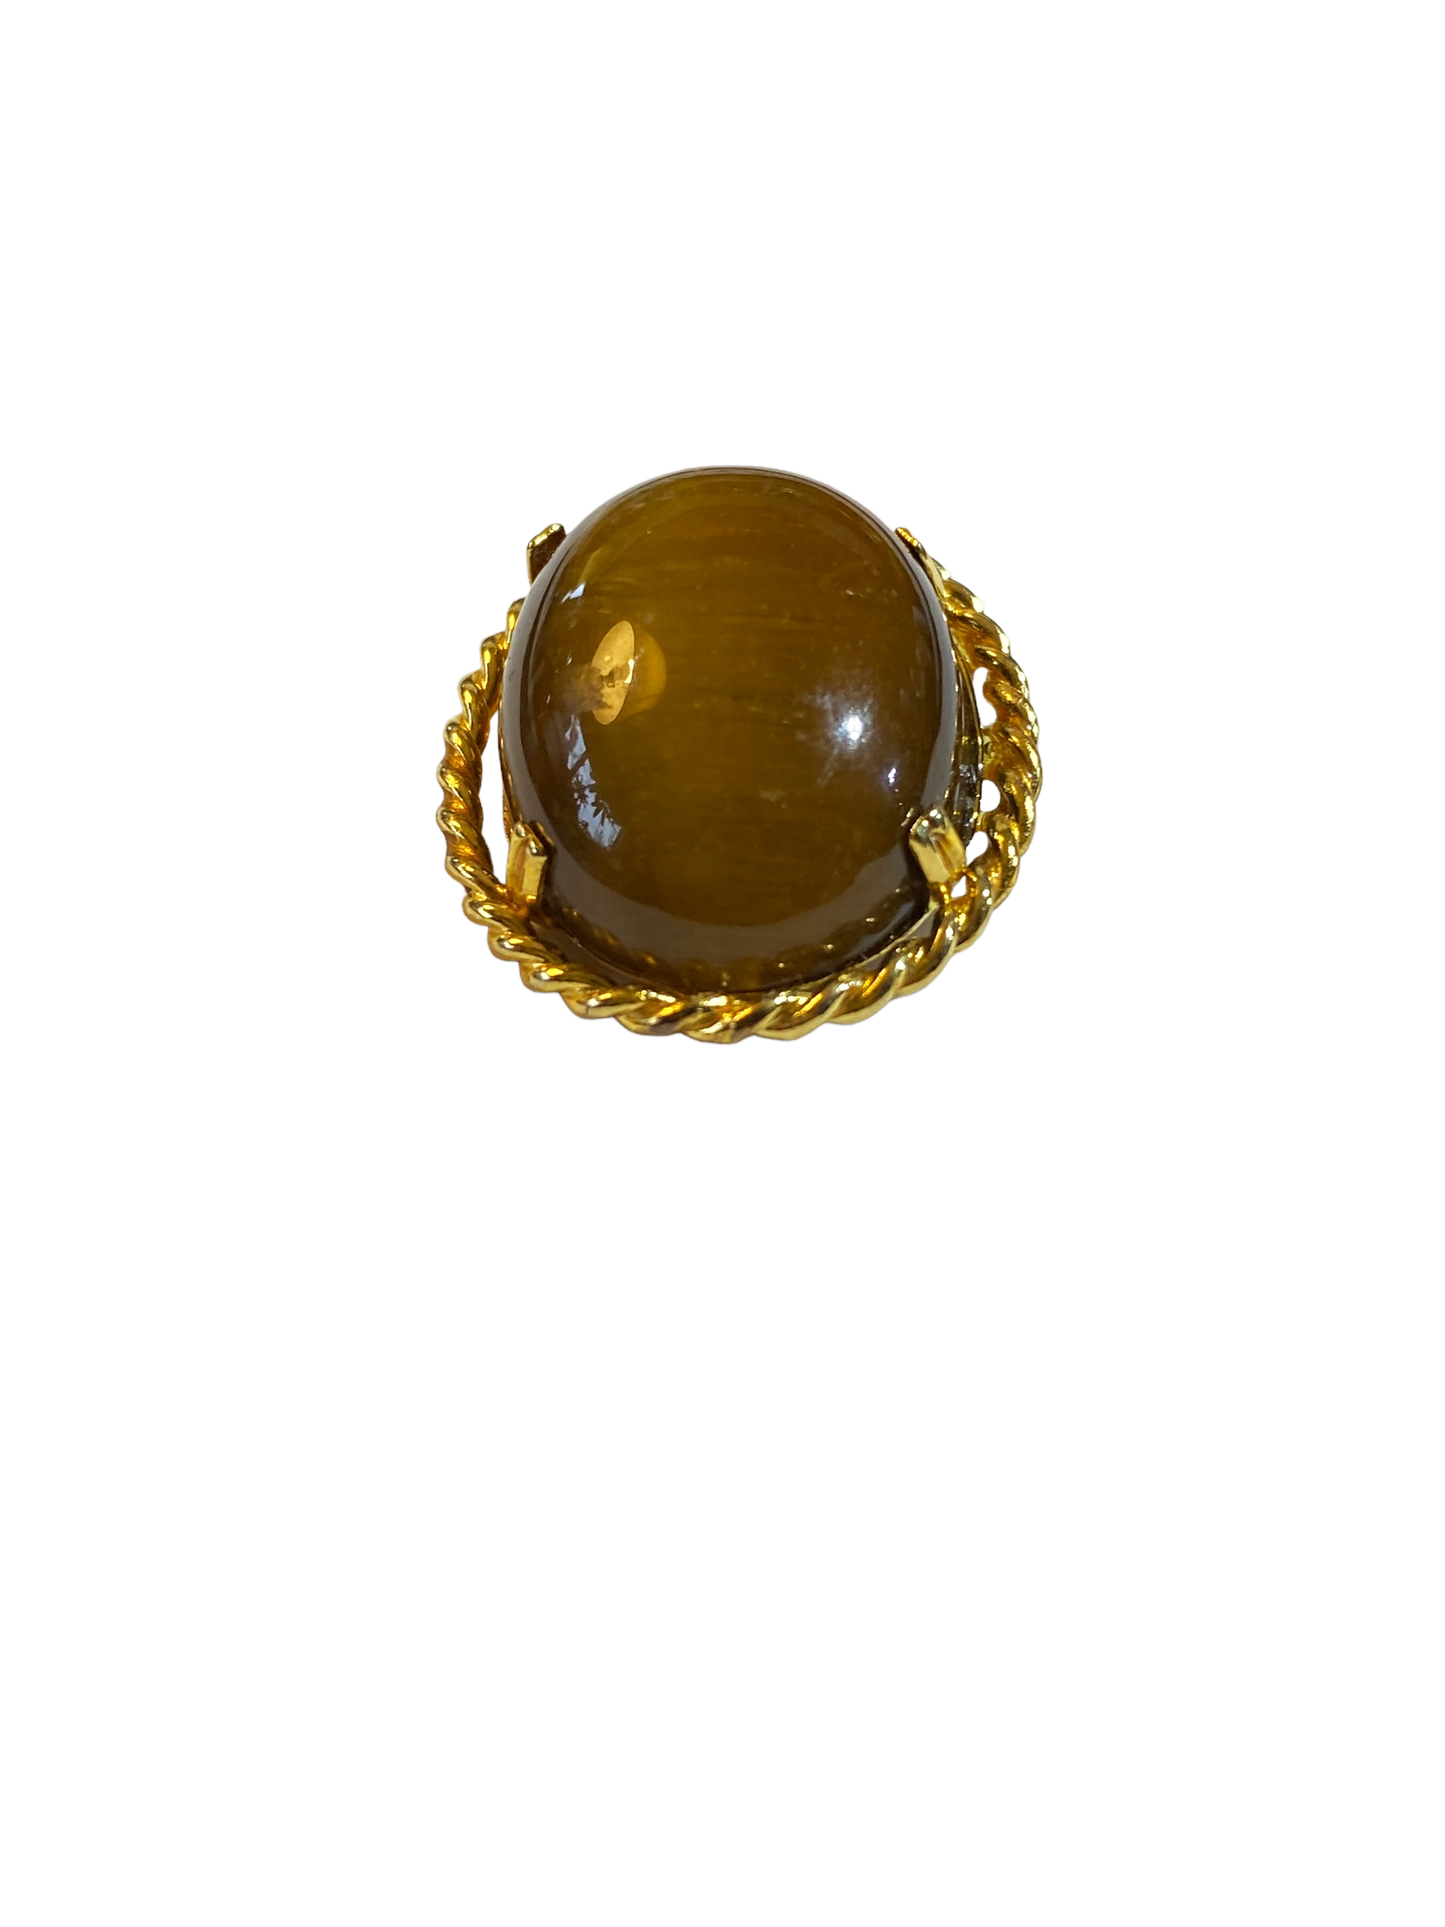 #5044 Vintage 12K Gold Filled Hallmarked Oval Shape Tiger's Eye Stone Brooch